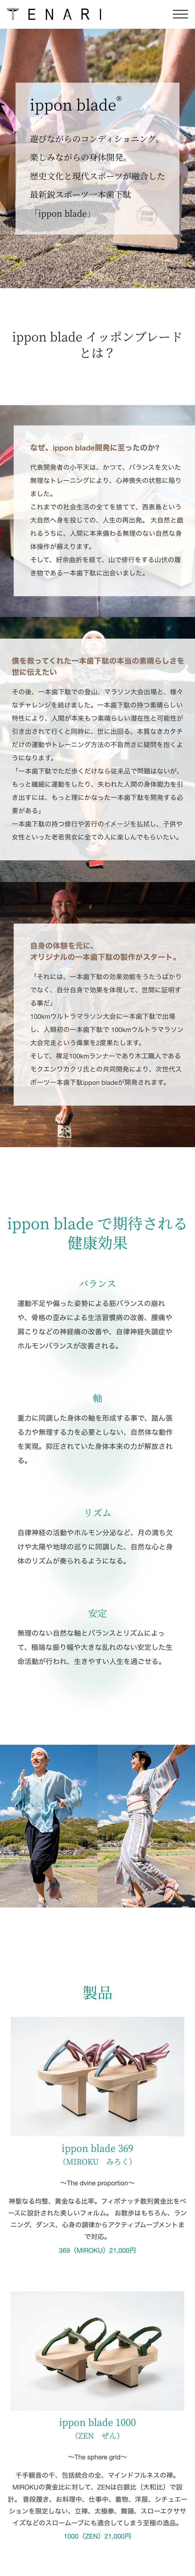 ippon blade 369 （MIROKU みろく） | selemed.com.pe